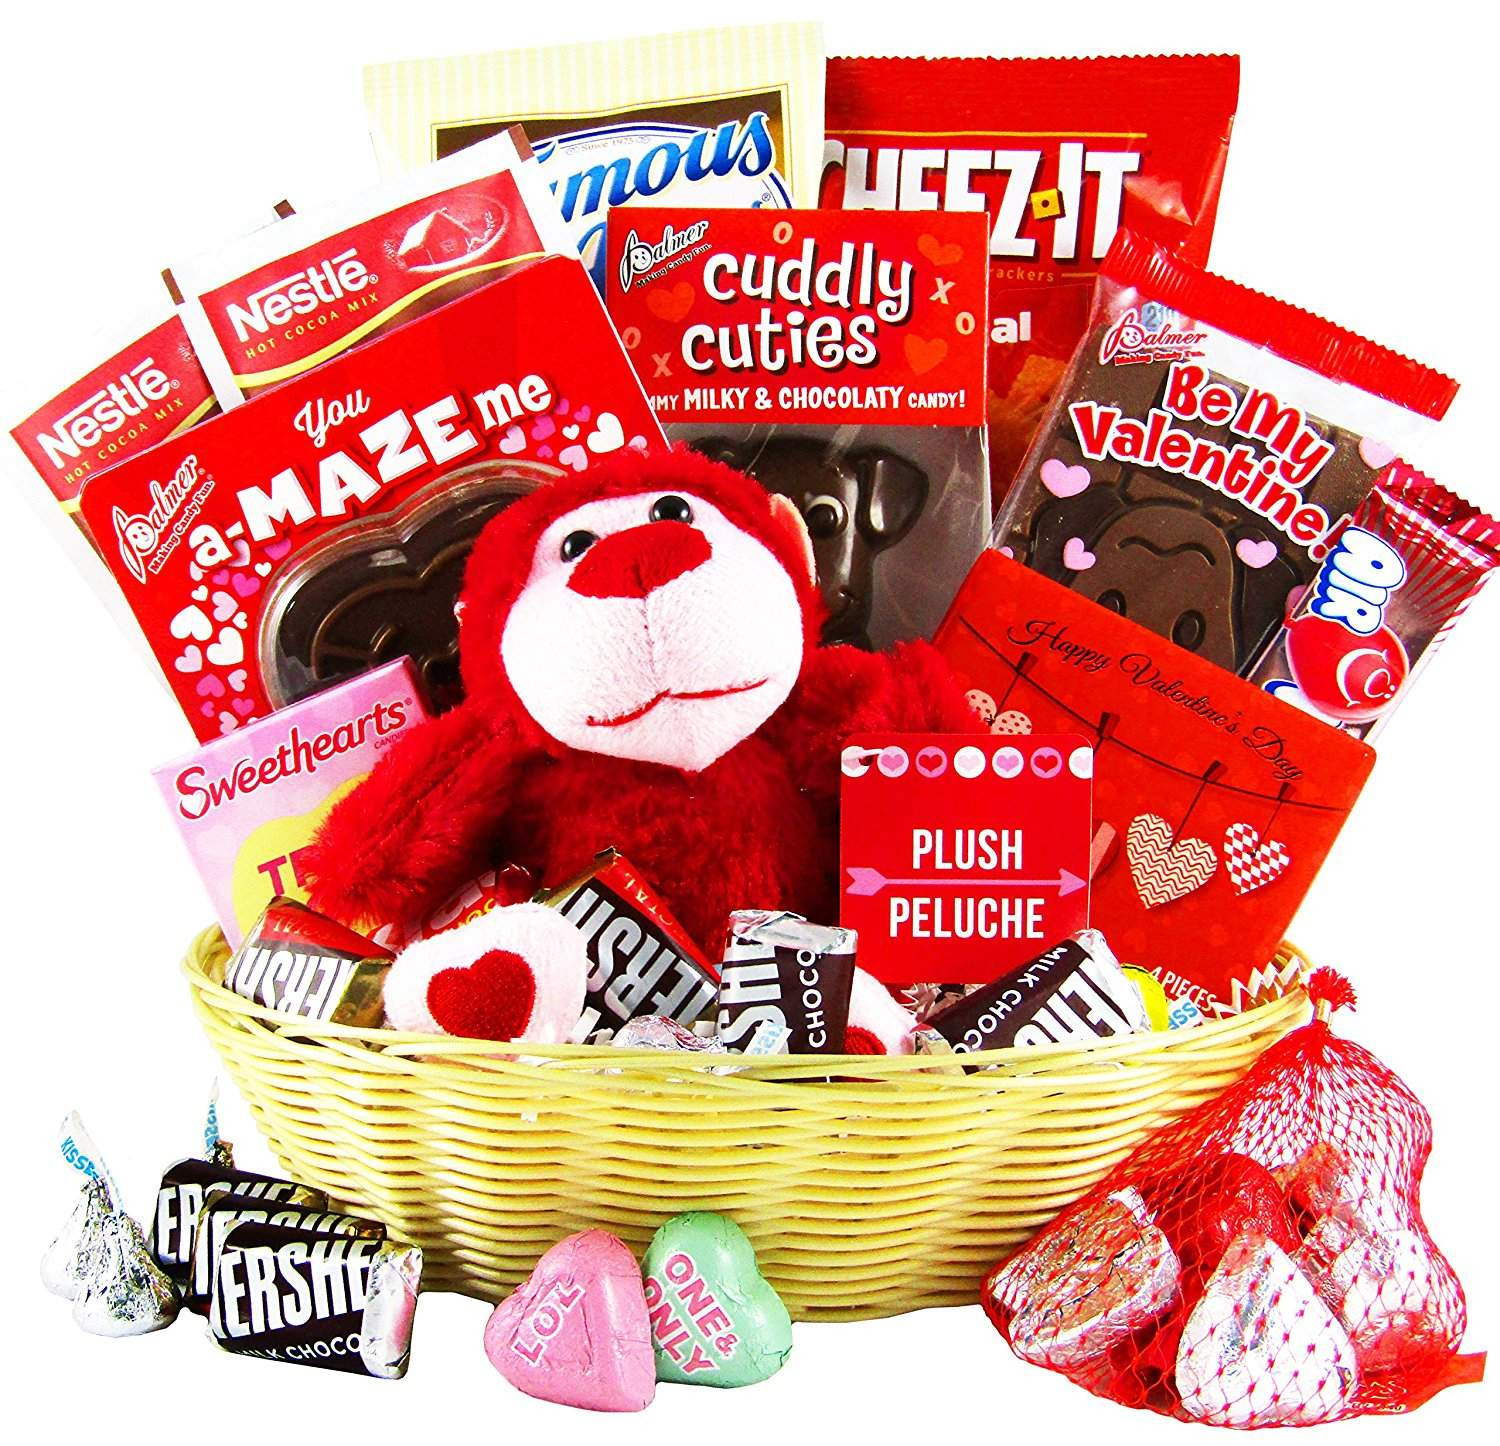 Valentine Candy Gift Ideas
 Top 10 Best Valentine’s Day Candy Gift Ideas